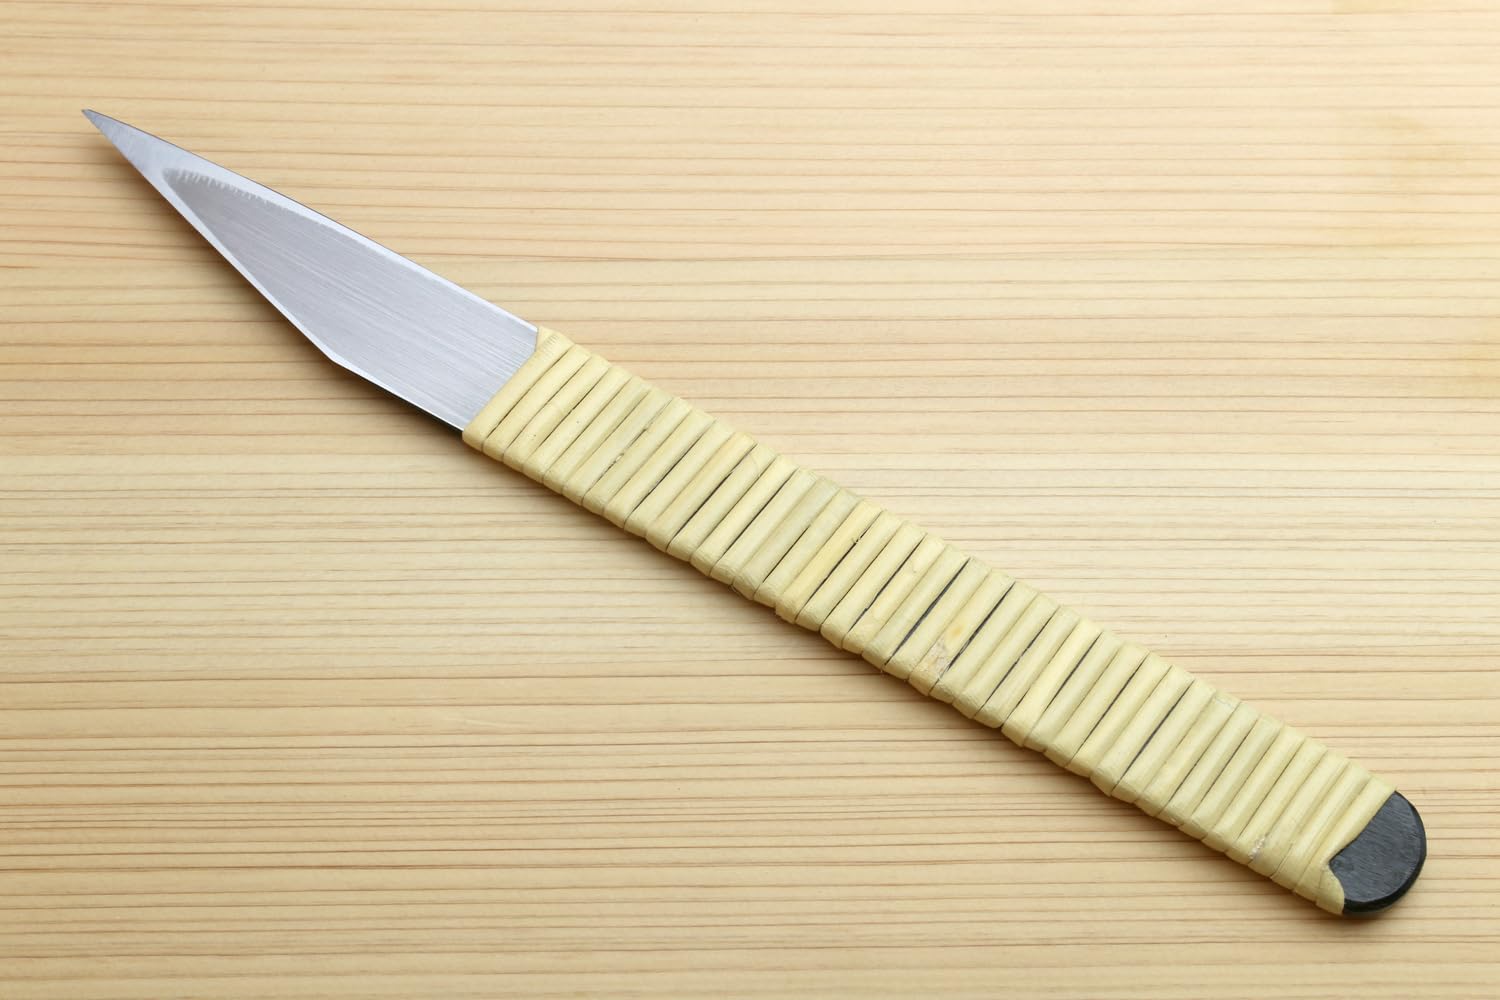 Yoshihiro High Carbon White Steel #1 Kiridashi Knife Made in Japan Chef Tools (Width:18mm)